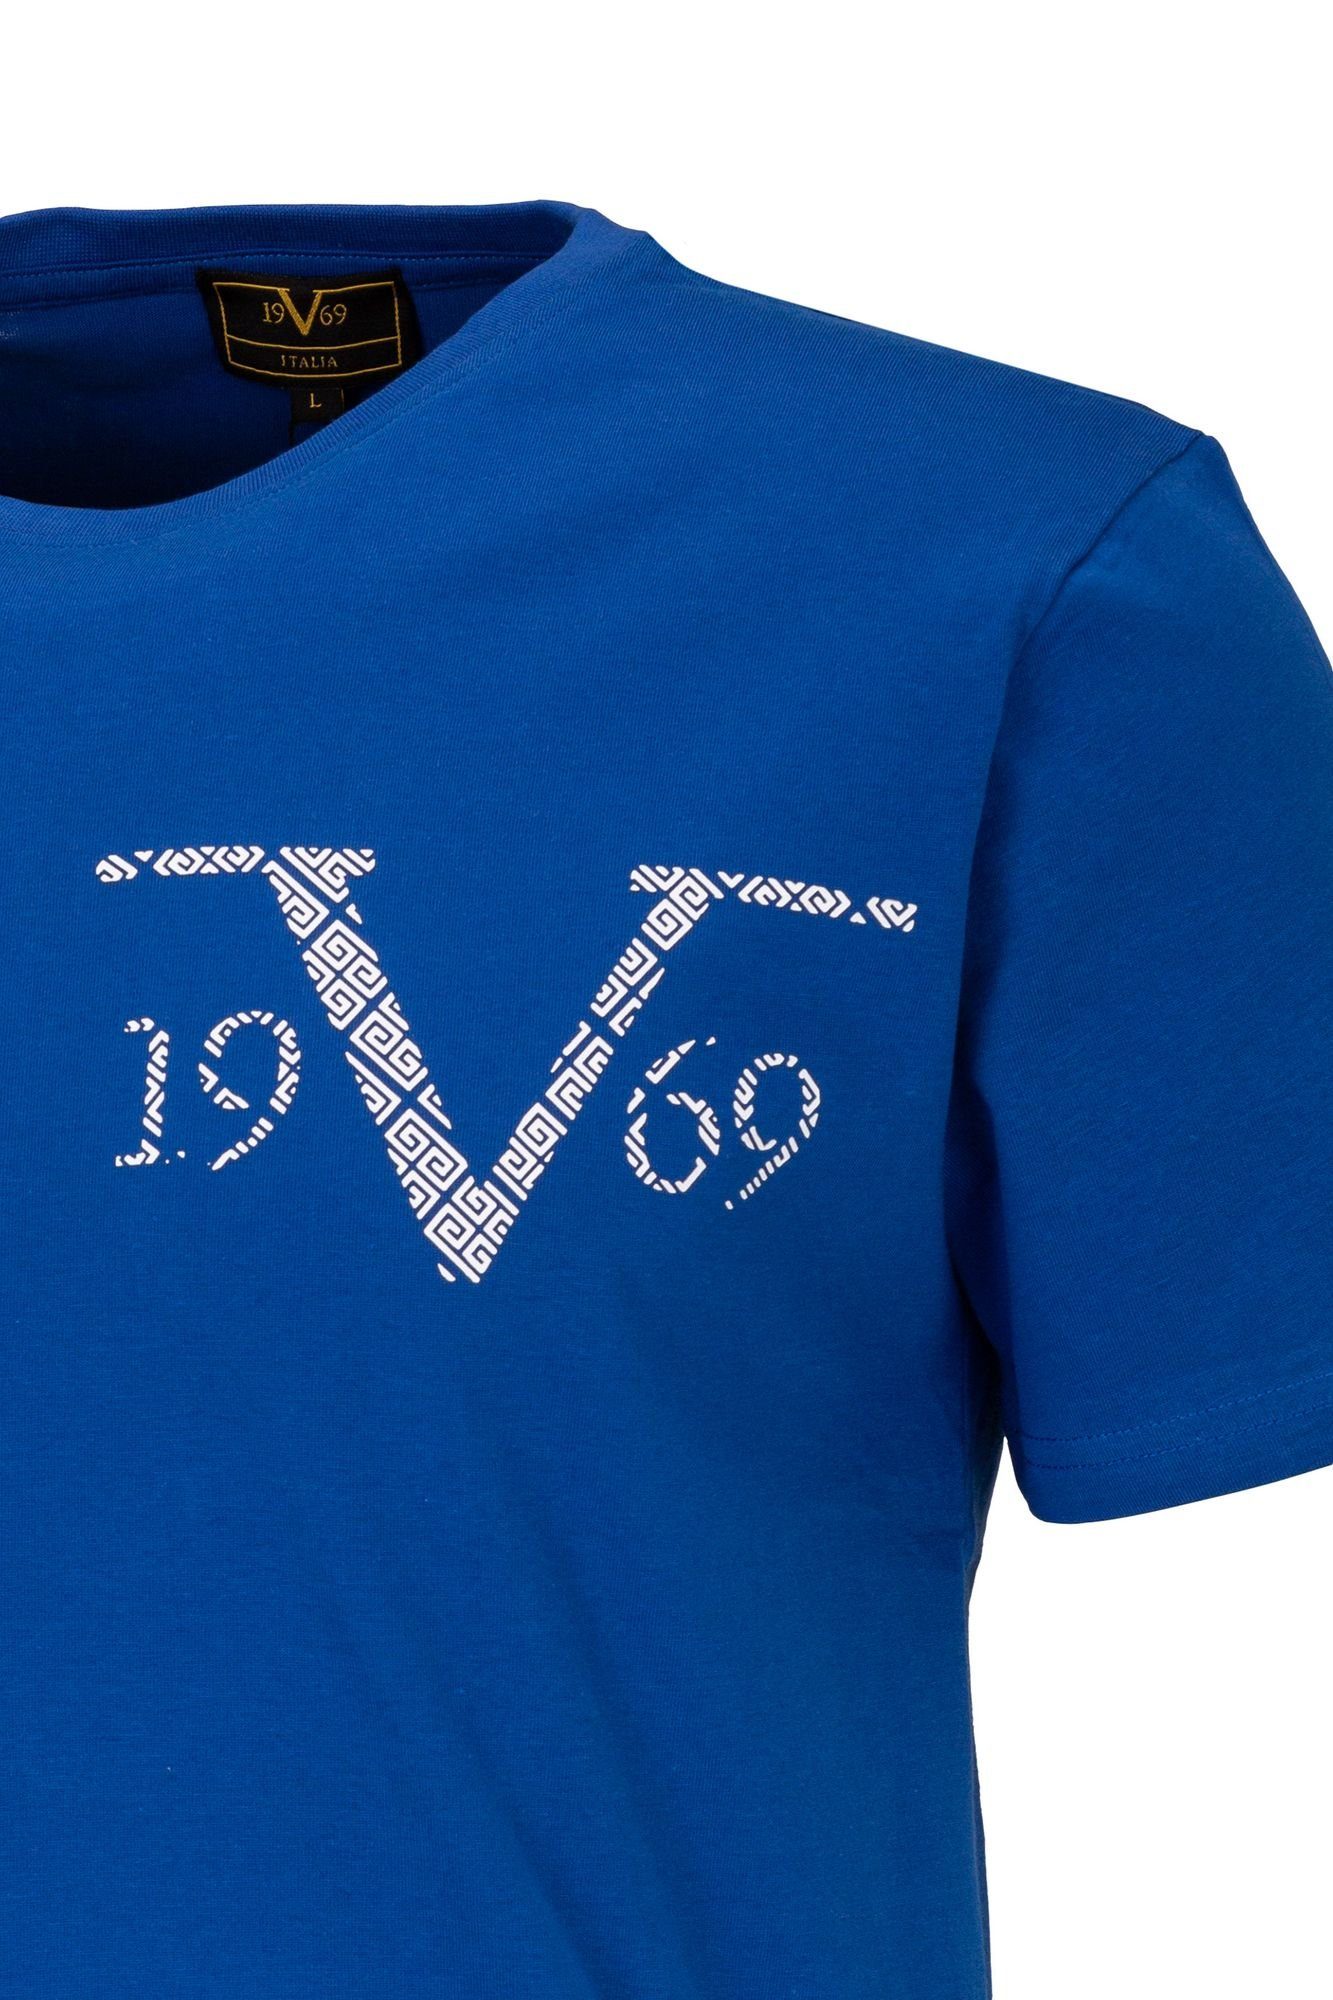 19V69 Italia by T-Shirt Versace Nicolo